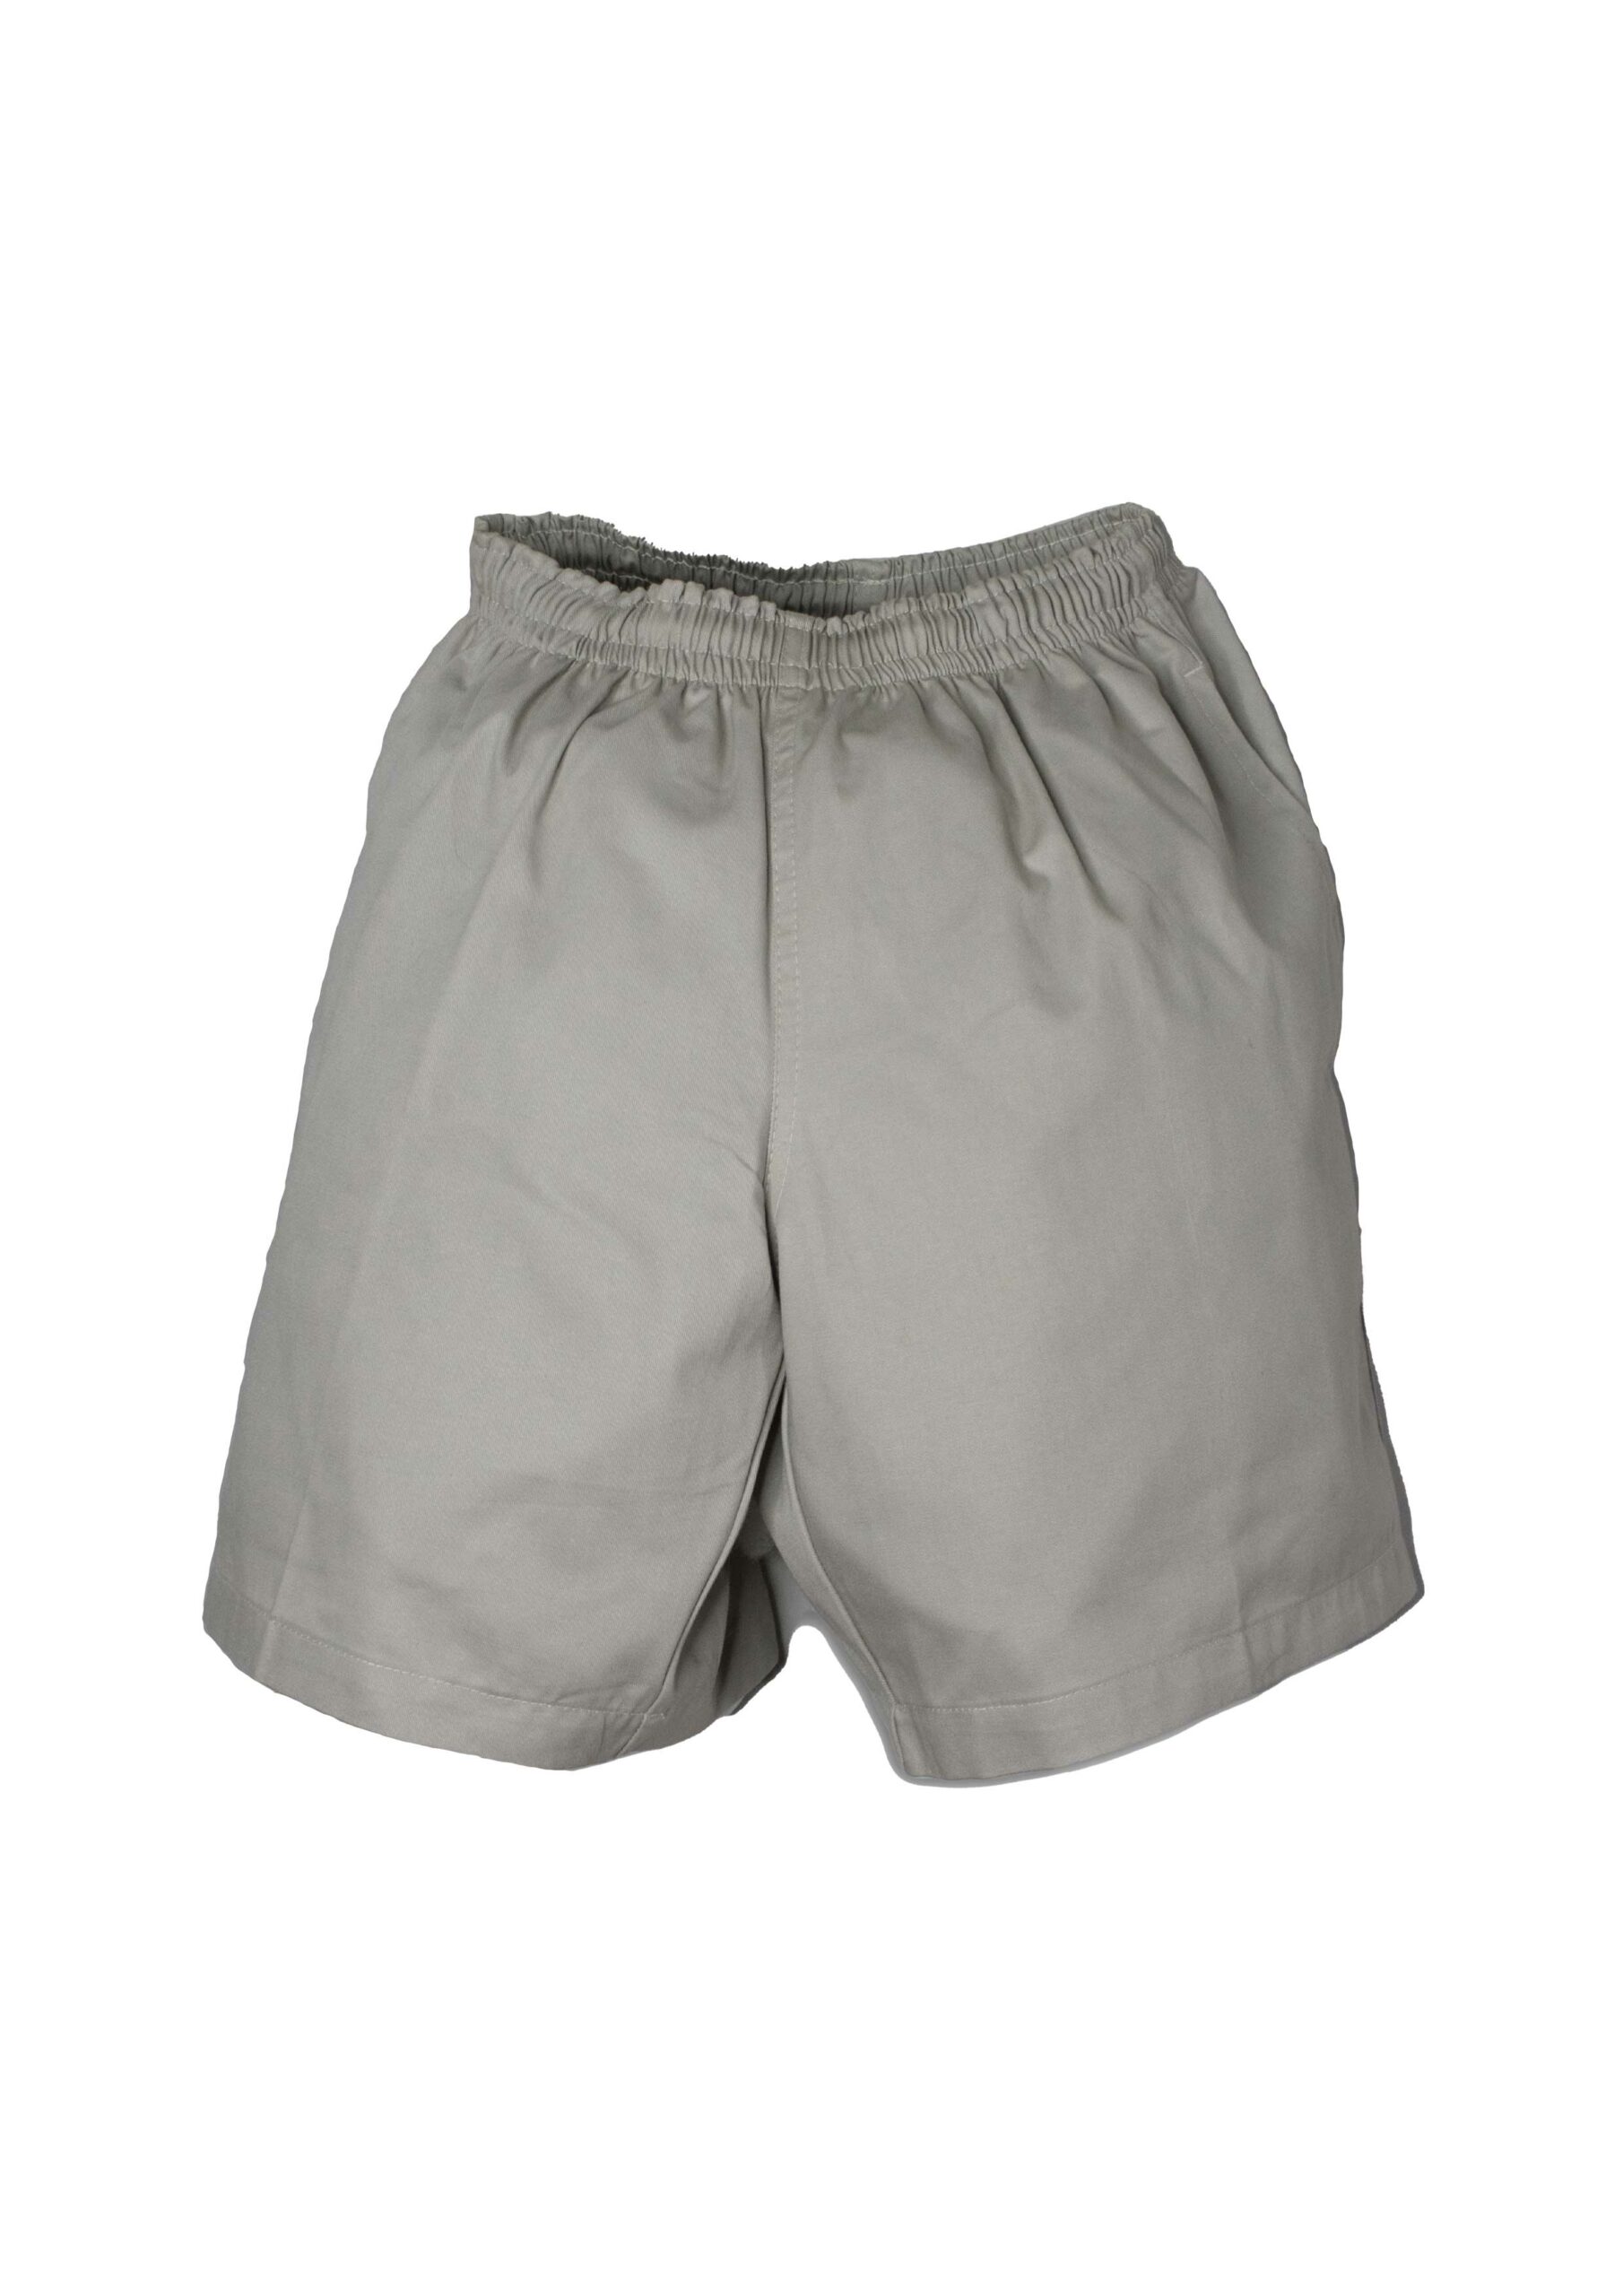 Rhino Boxer Shorts - No Cargo - Big John Online Clothing Company